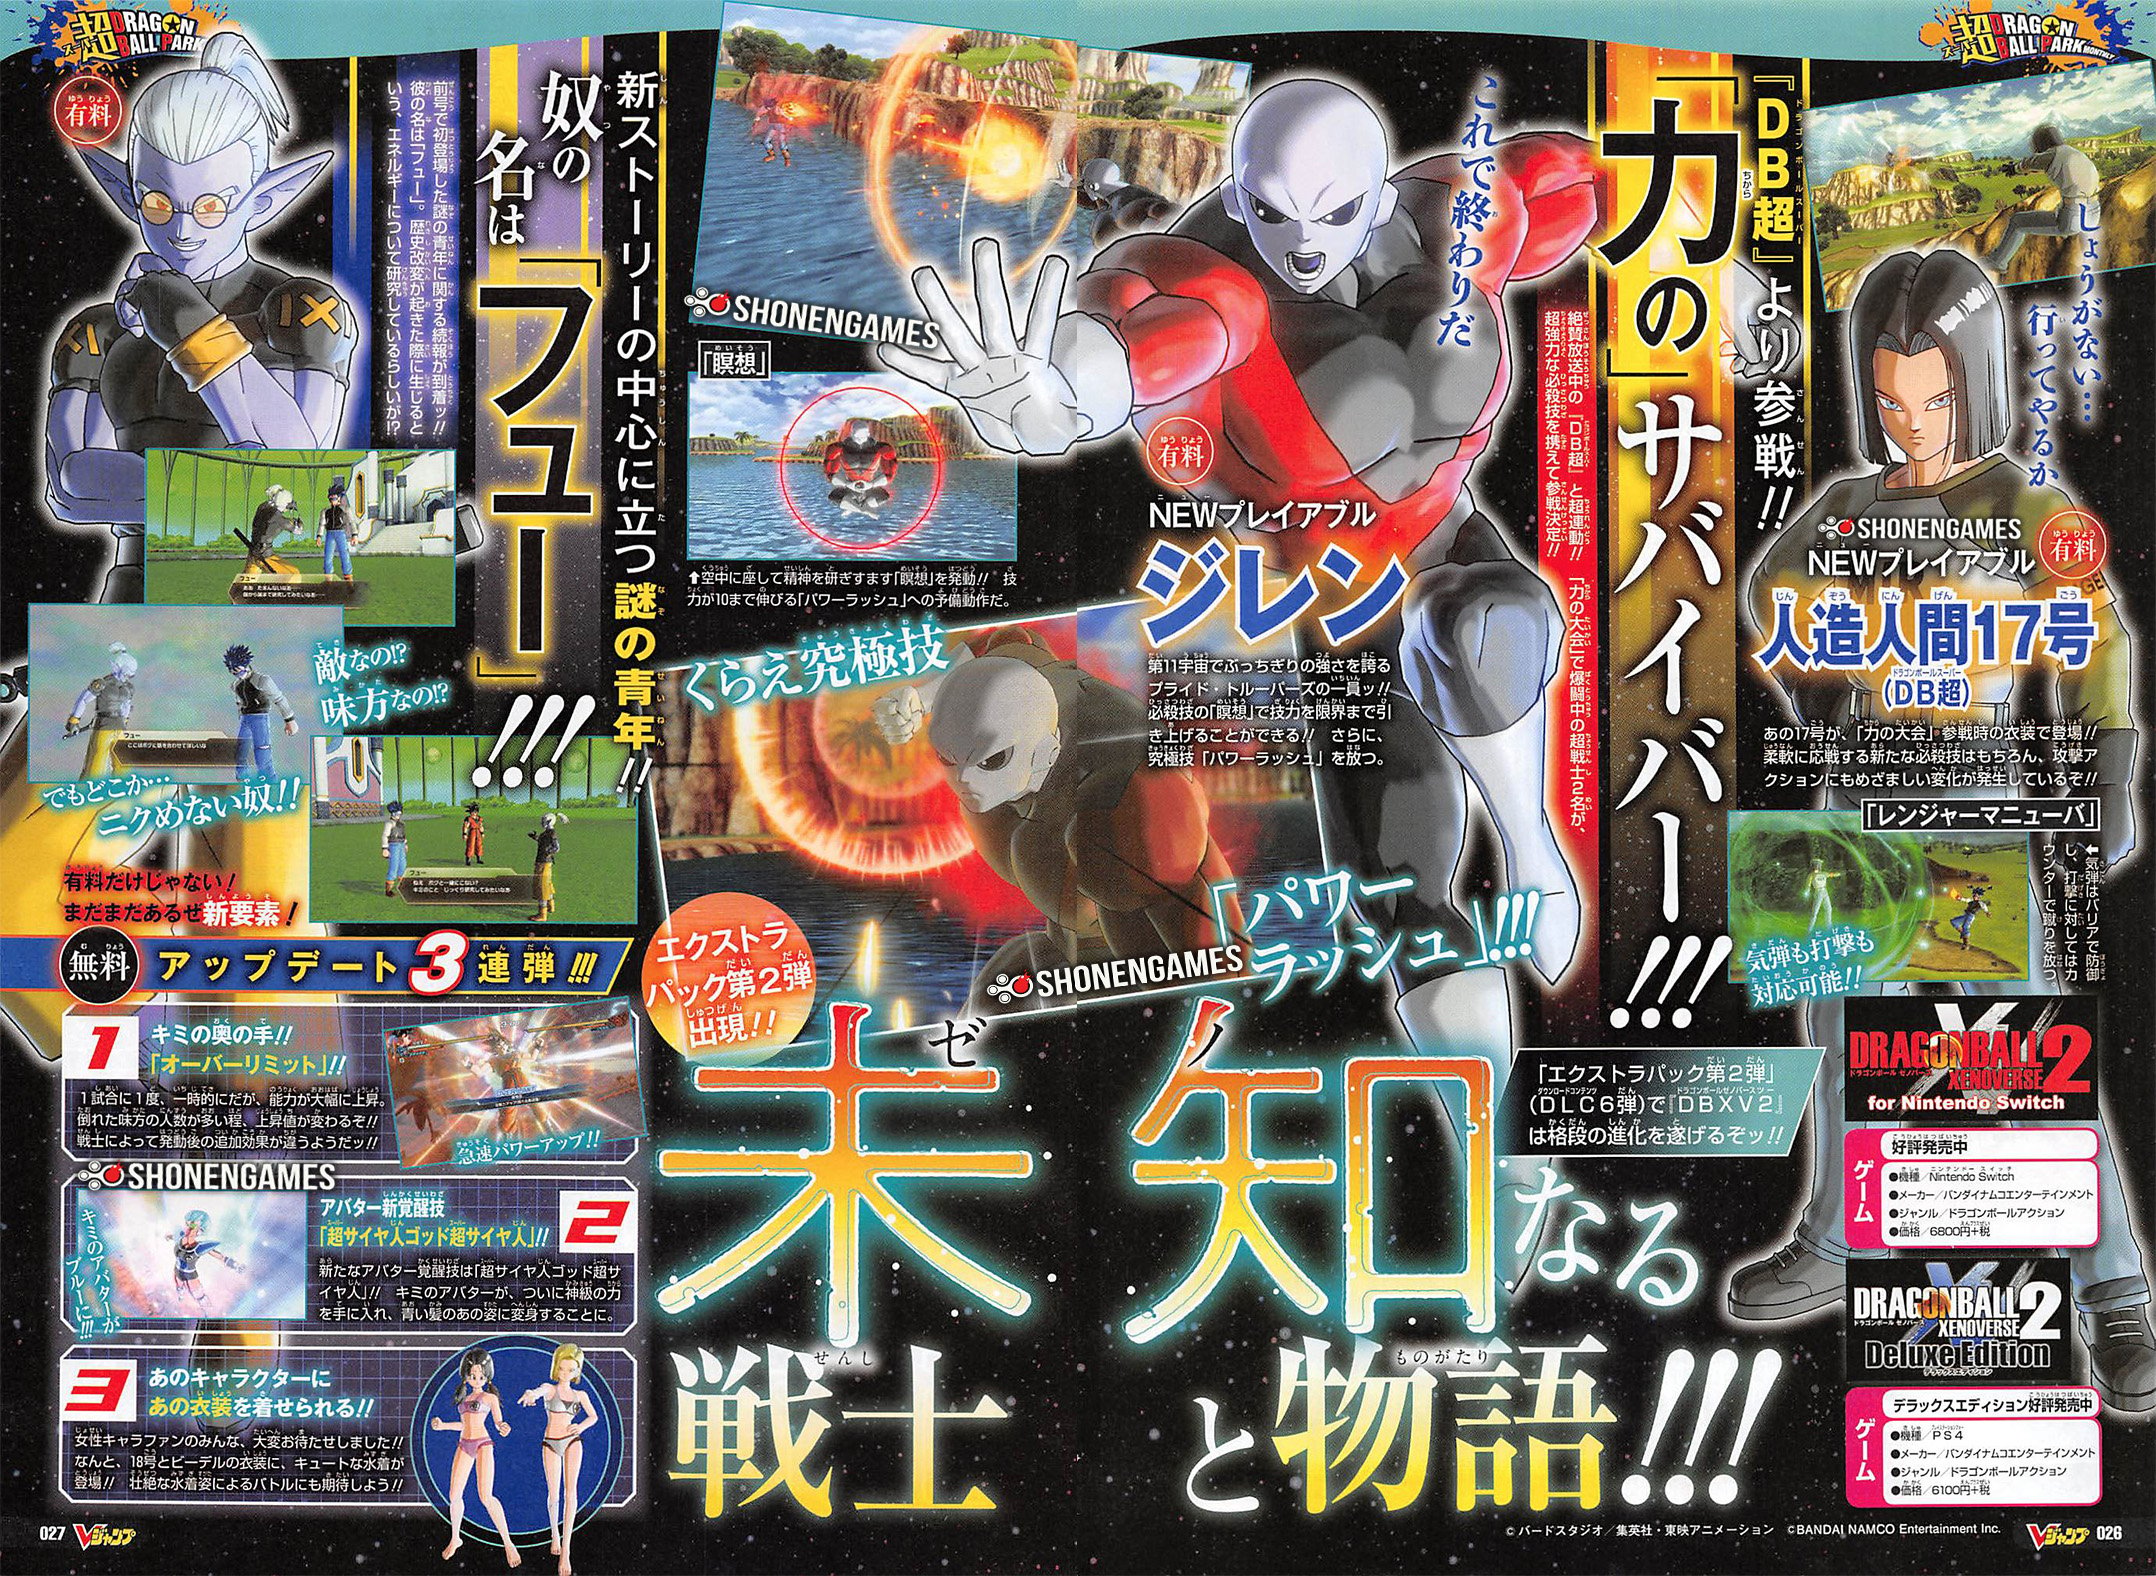 Dragon Ball Xenoverse 2 Dlc Extra Pack 2 Adds Jiren Android 17 Dragon Ball Super Gematsu